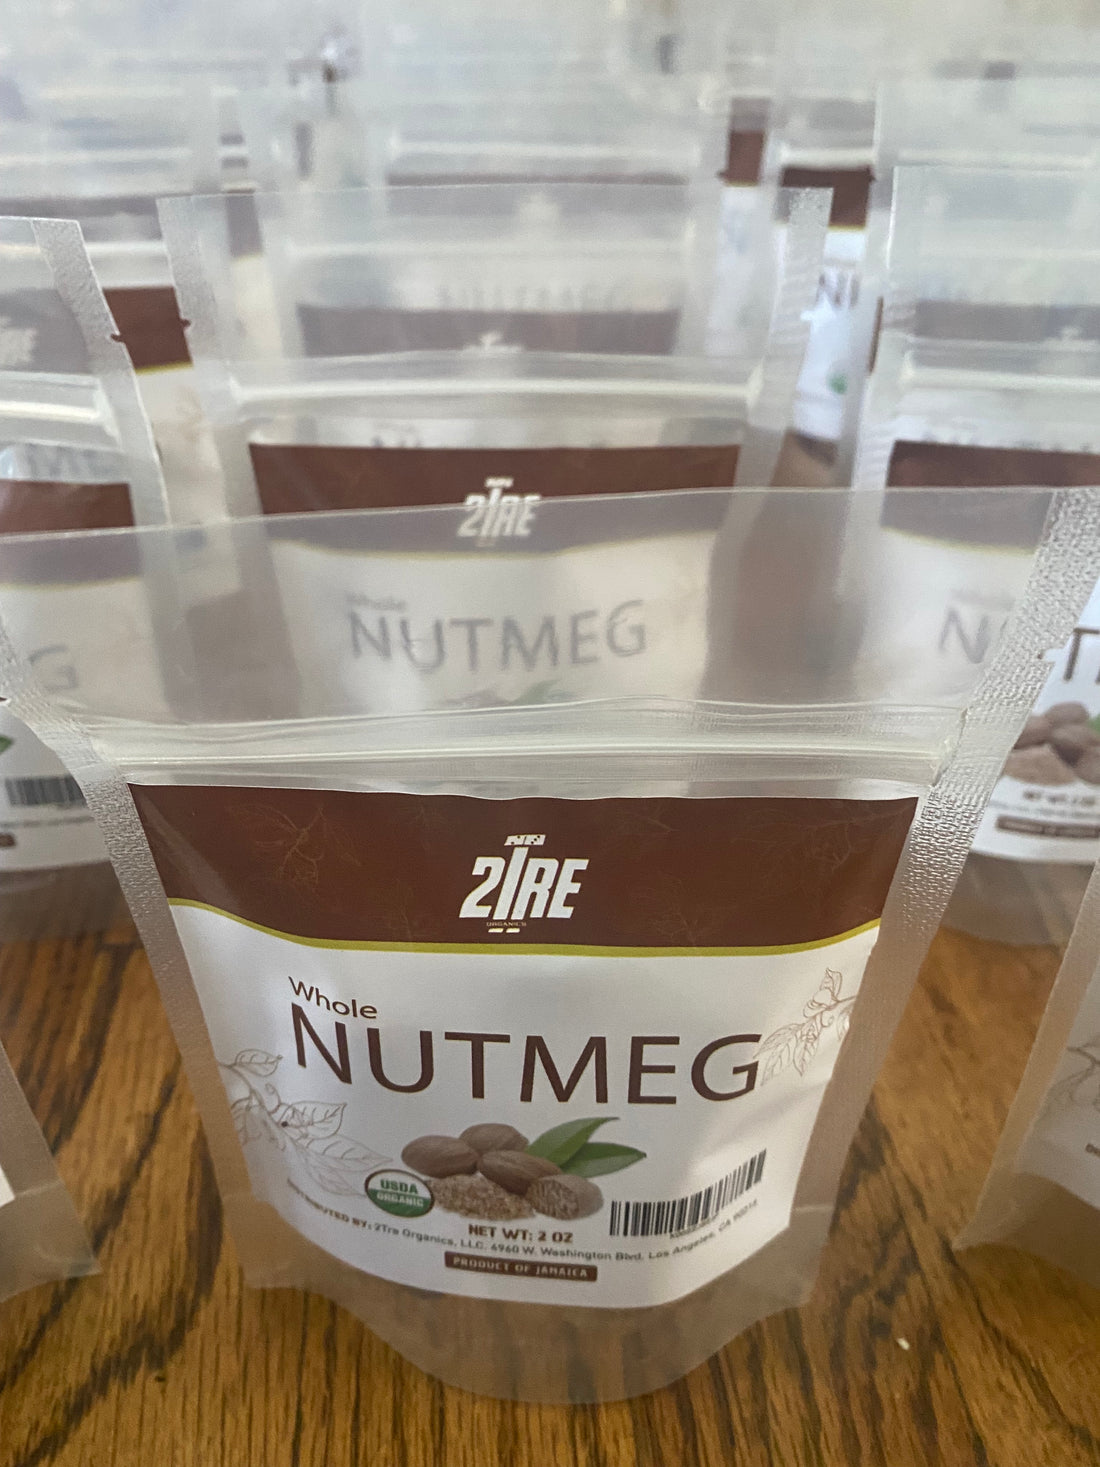 Where can I buy high-quality nutmeg and mace?